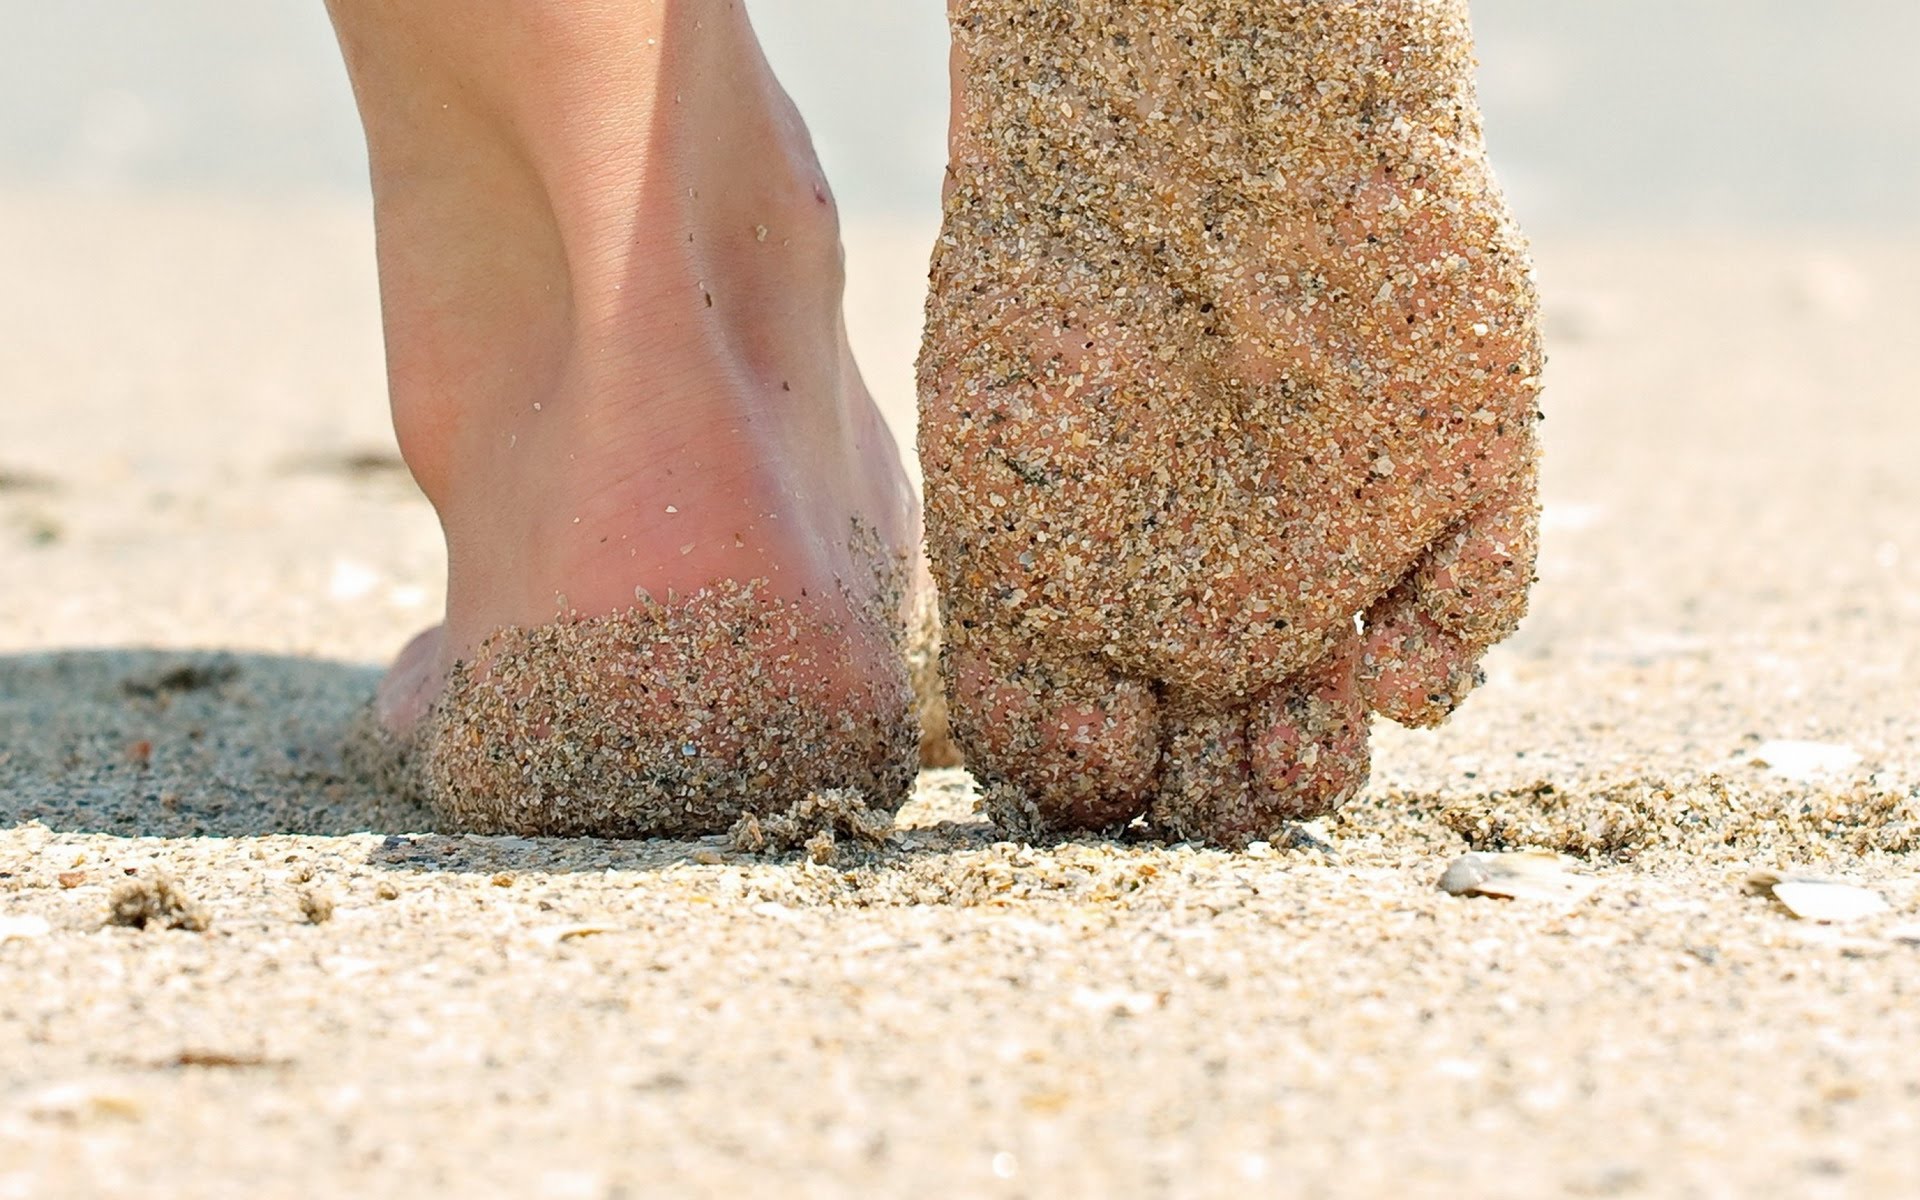  Revela estudio que correr descalzo reduce riesgo de lesiones